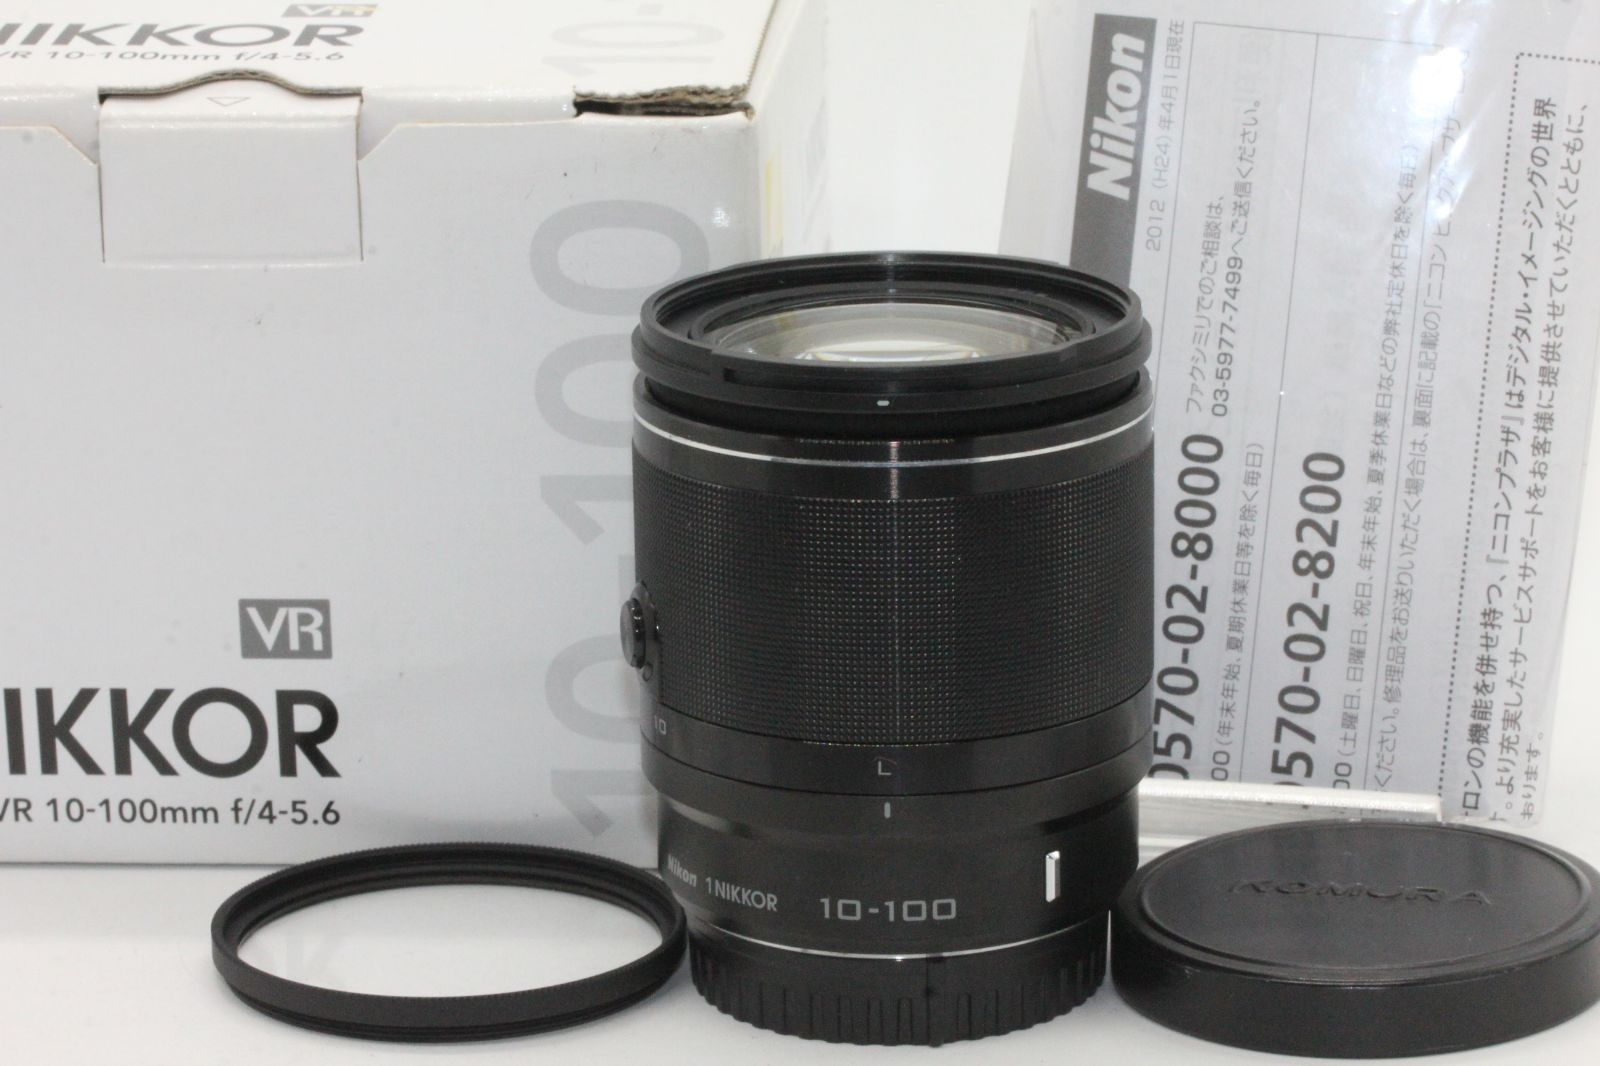 Nikon ニコン 1 NIKKOR 10-100mm 4-5.6 VR レンズ - カメラ